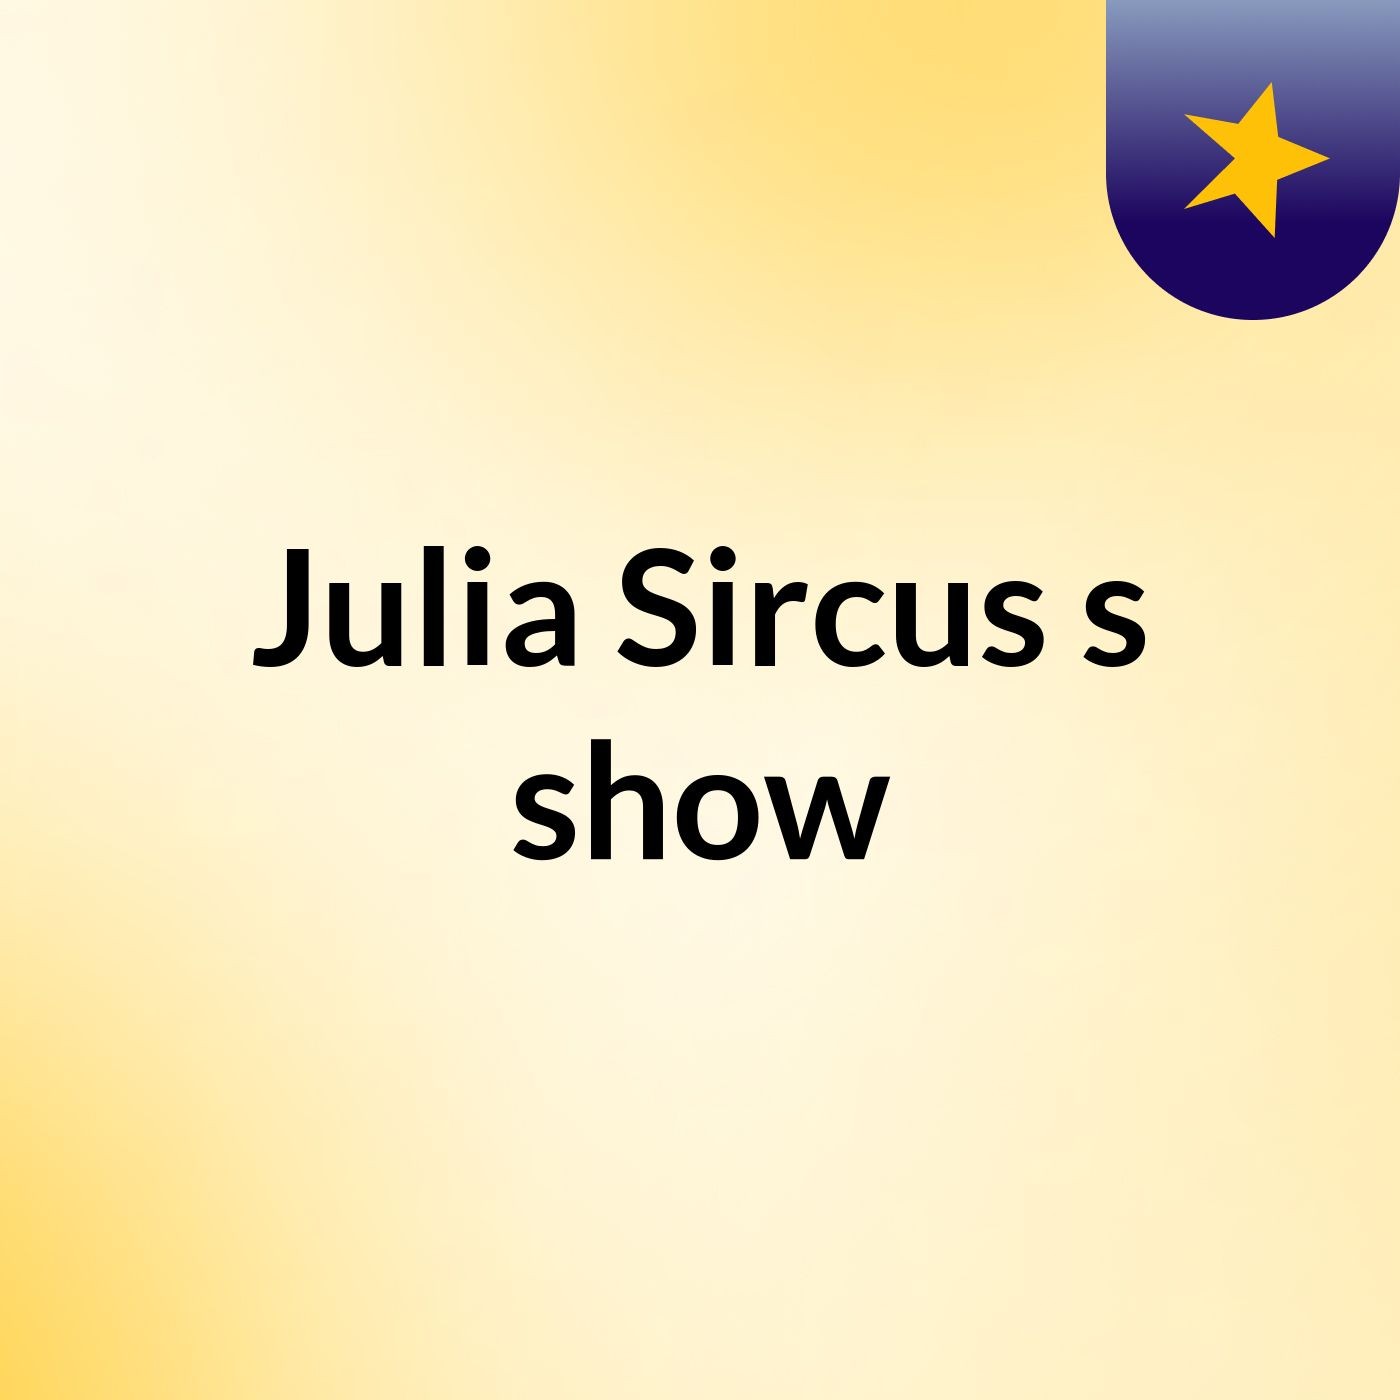 Julia Sircus's show